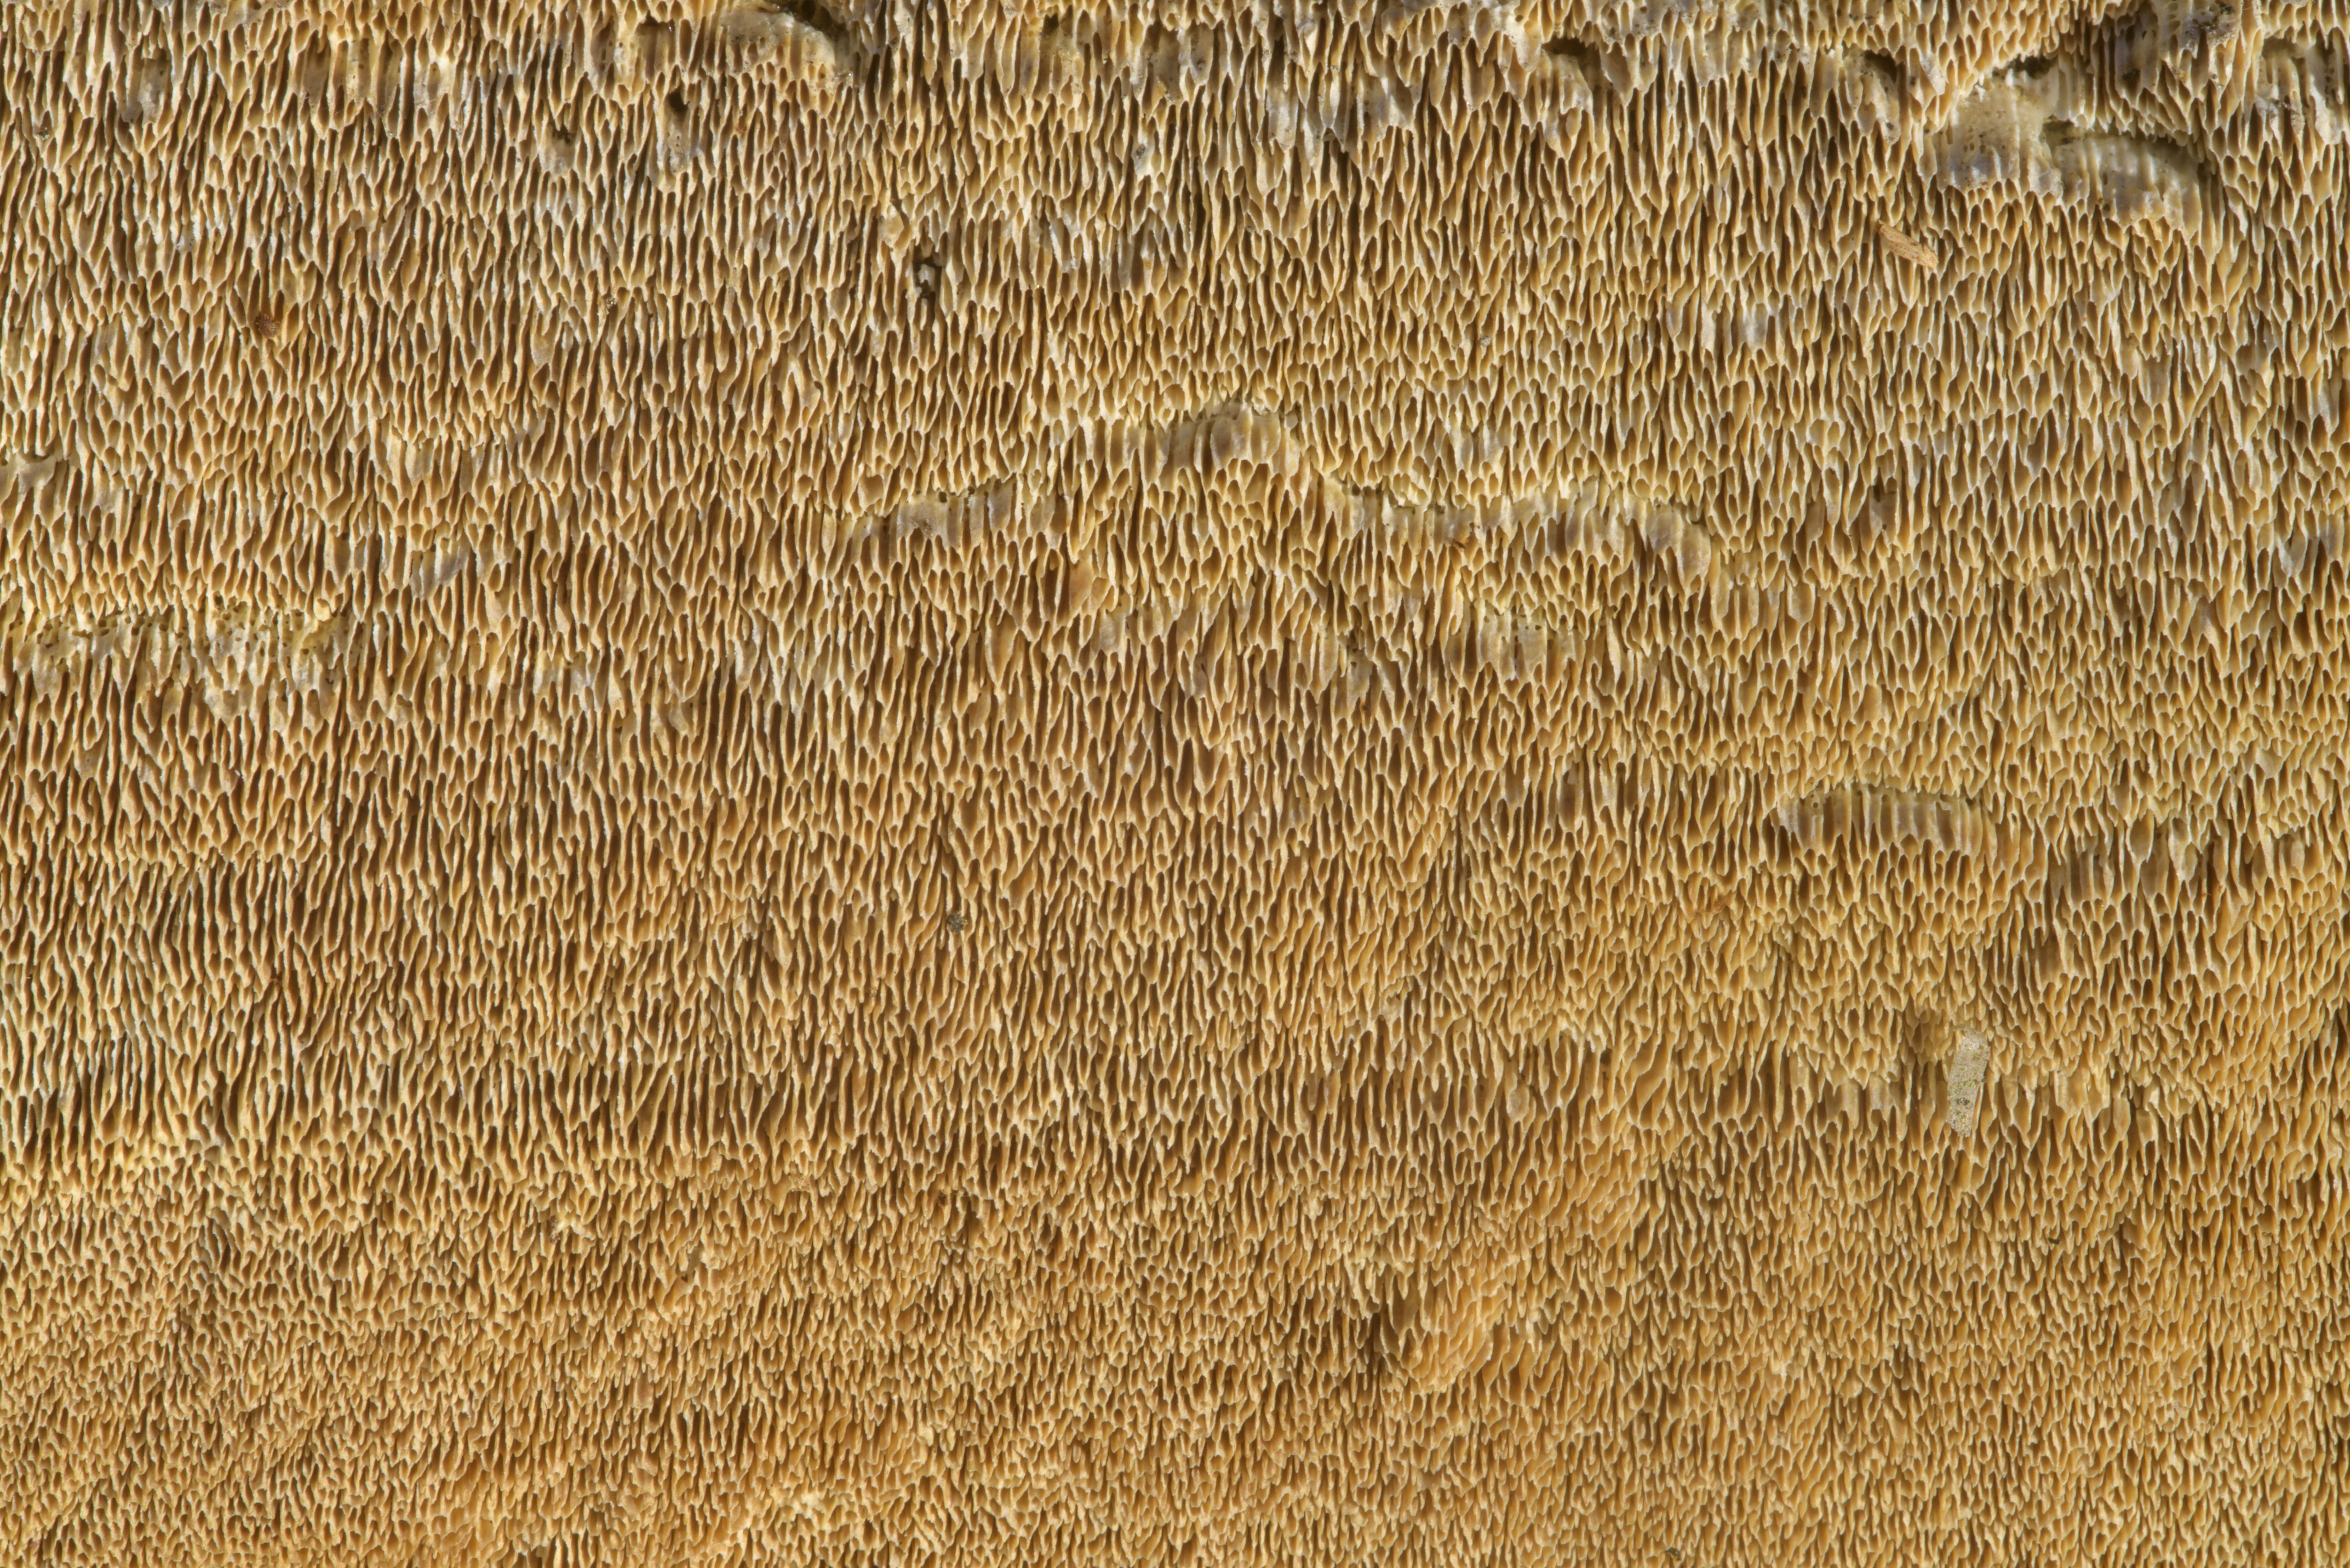 Photo 2012-06: Texture of corticioid mushroom Amyloporia sinuosa ...